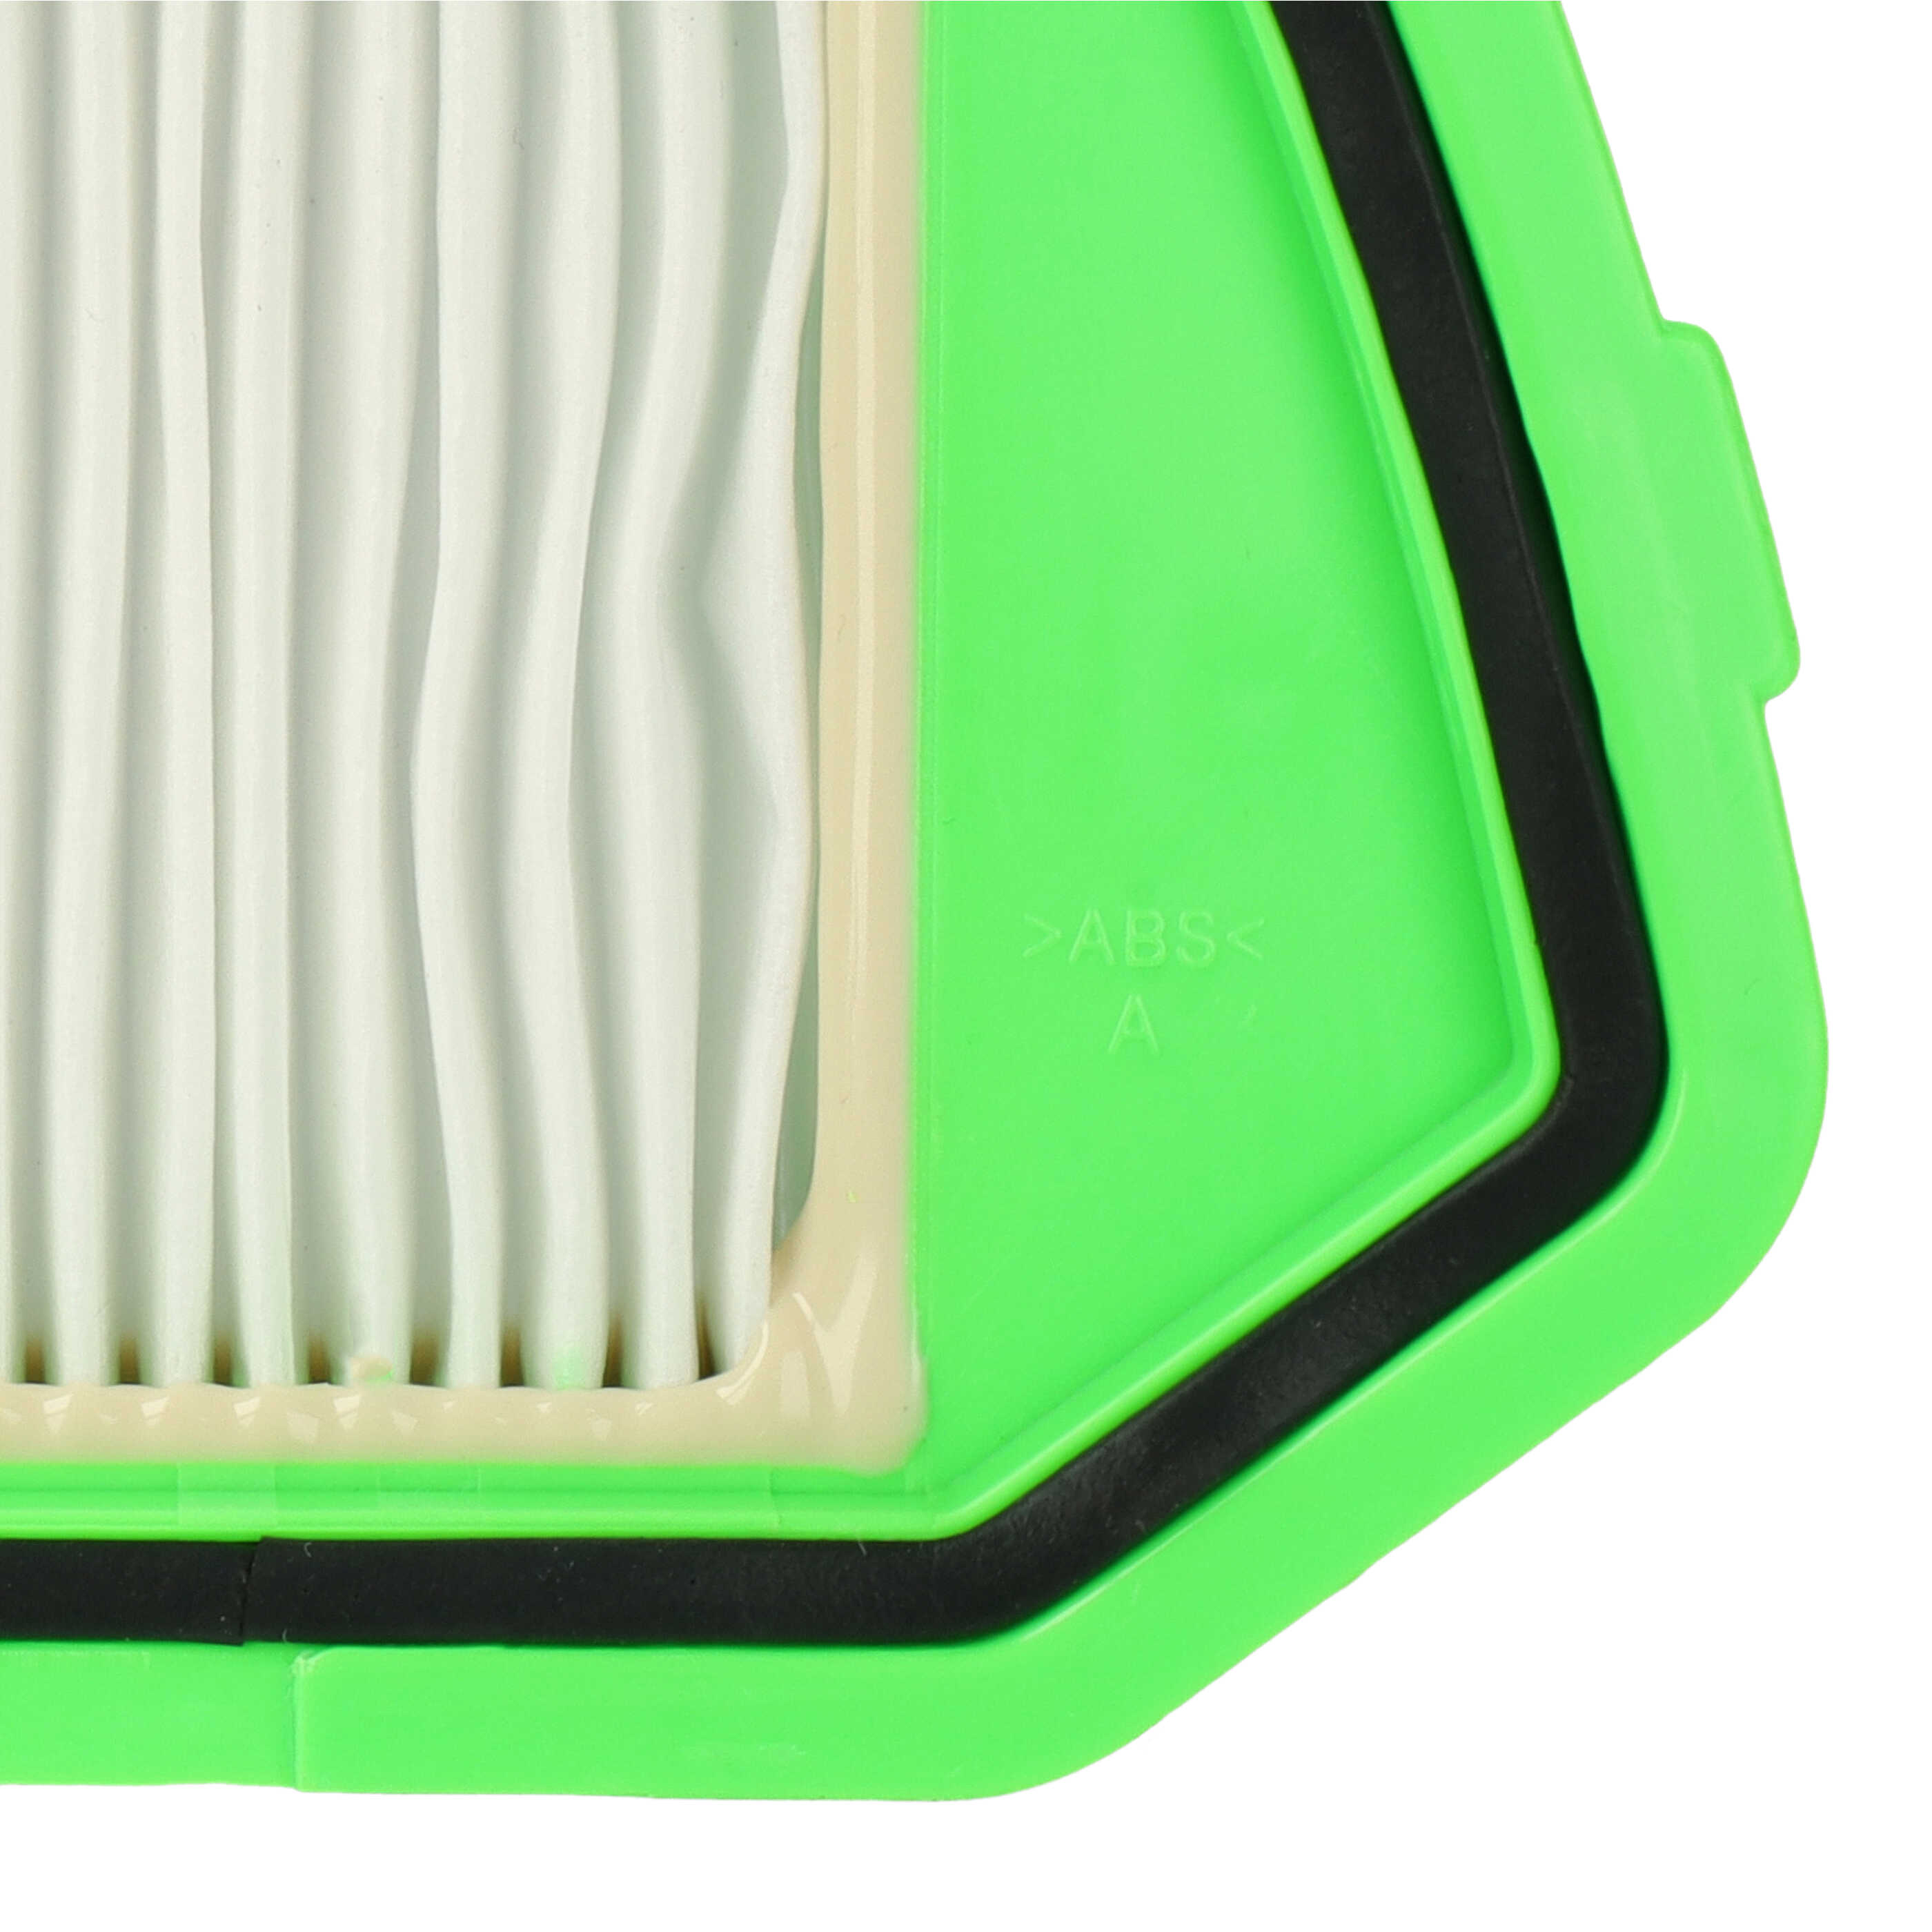 4-Part Filter/Brush Set replaces Rowenta ZR005501, ZR005401 for Moulinex Vacuum Cleaner etc. 